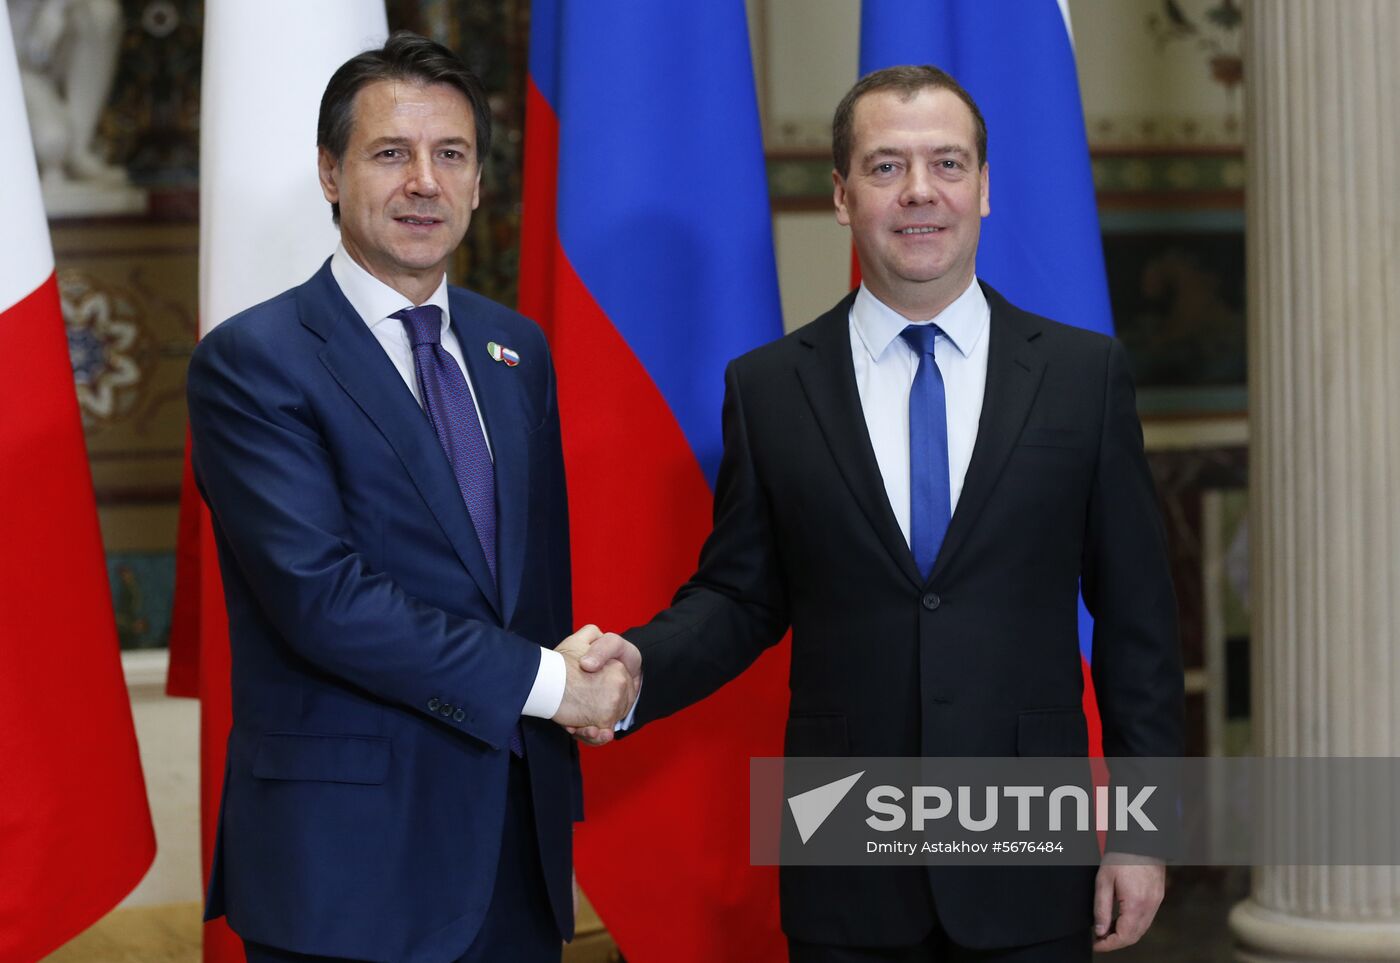 Prime Minister Dmitry Medvedev meets with Italian Prime Minister Giuseppe Conte